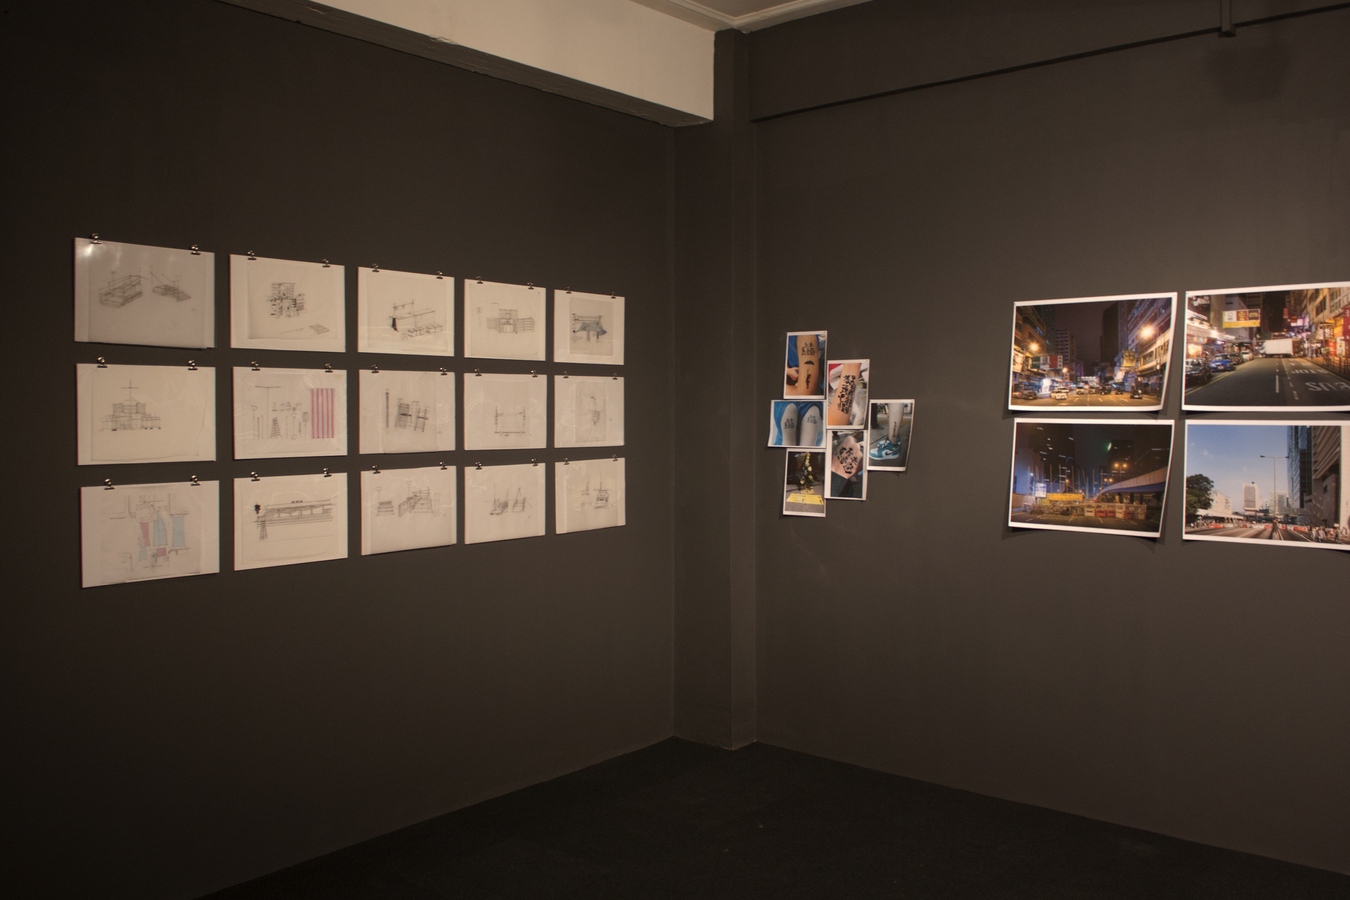 installation viewSwing Lam, sketchesVoices on Skin ProjectTSE Pak Chai, Barricades, photographs, 2014